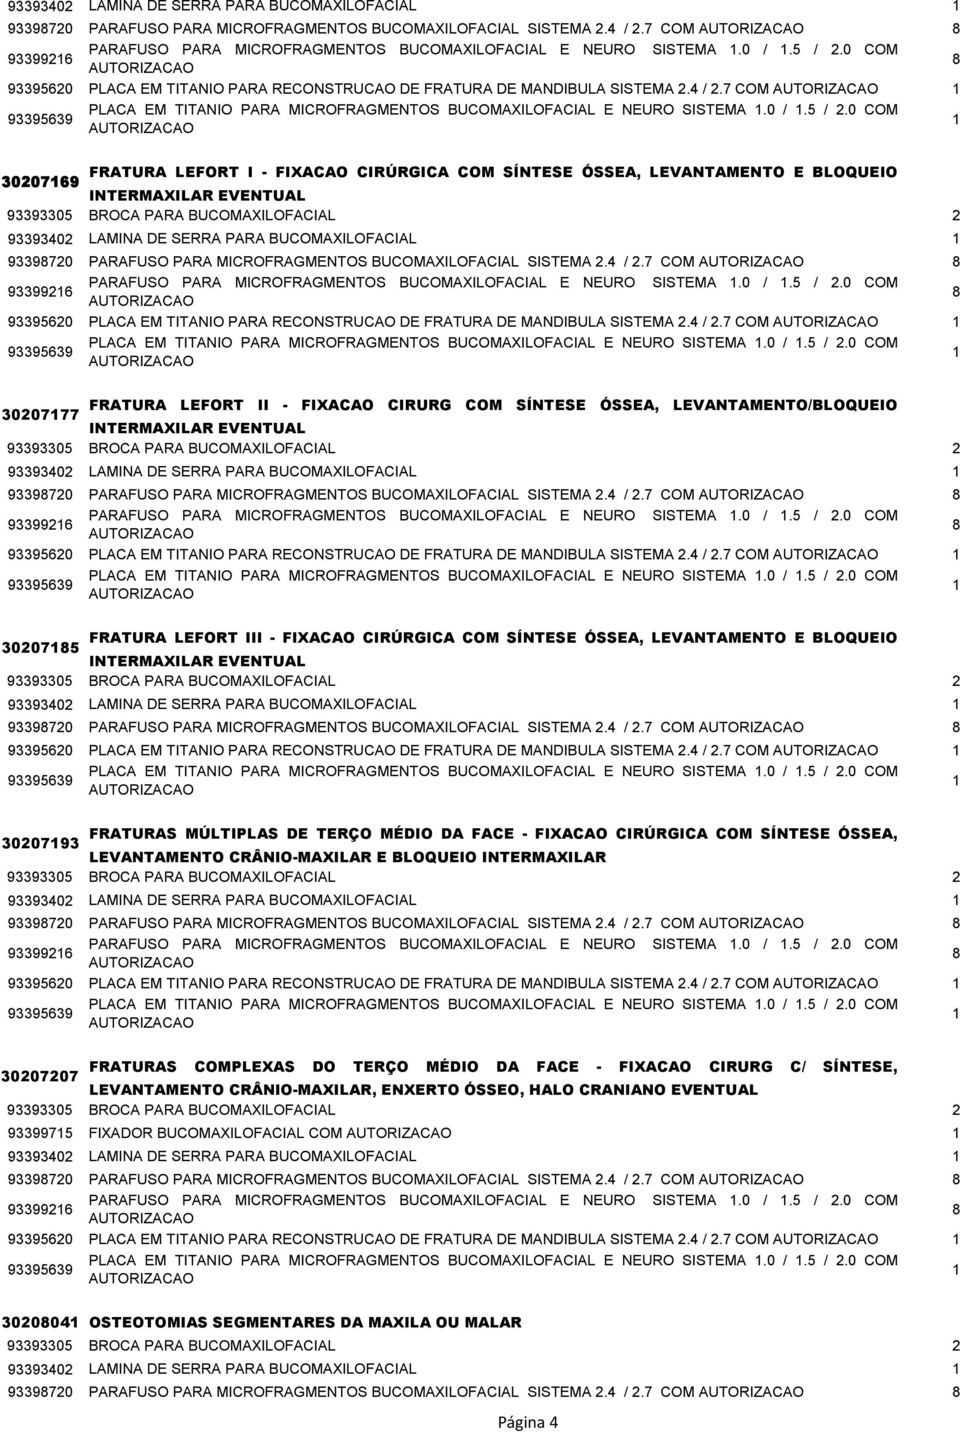 5 / 2.0 COM 8 93395620 PLACA EM TITANIO PARA RECONSTRUCAO DE FRATURA DE MANDIBULA SISTEMA 2.4 / 2.7 COM 93395639 PLACA EM TITANIO PARA MICROFRAGMENTOS BUCOMAXILOFACIAL E NEURO SISTEMA.0 /.5 / 2.0 COM FRATURA LEFORT II - FIXACAO CIRURG COM SÍNTESE ÓSSEA, LEVANTAMENTO/BLOQUEIO 3020777 INTERMAXILAR EVENTUAL 93393305 BROCA PARA BUCOMAXILOFACIAL 2 0 /.